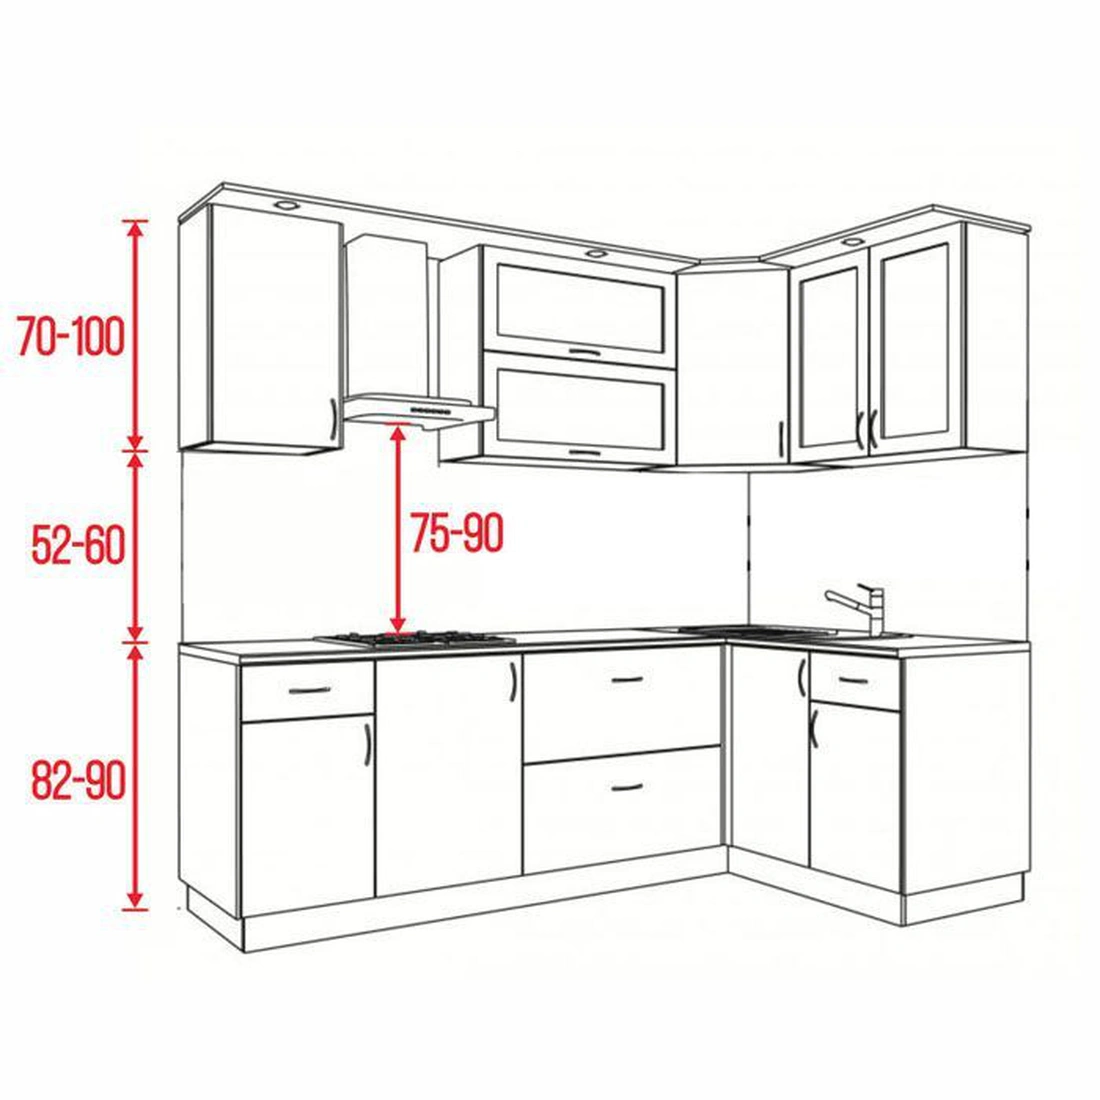 Стандартные размеры кухонного фартука.